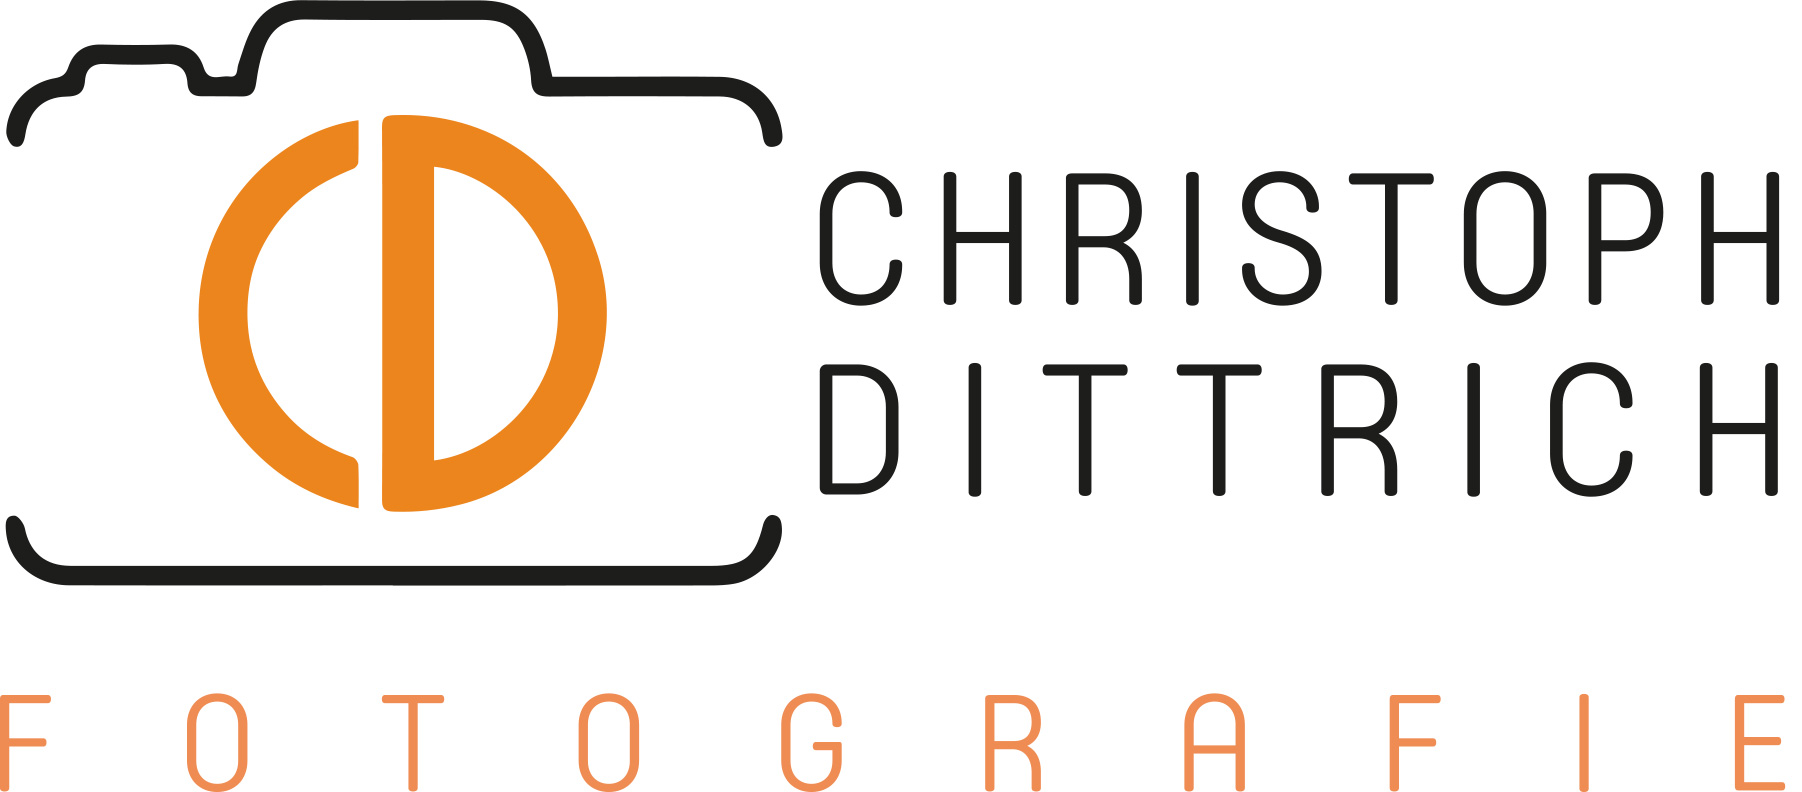 Christoph-Dittrich_Logo_FINAL